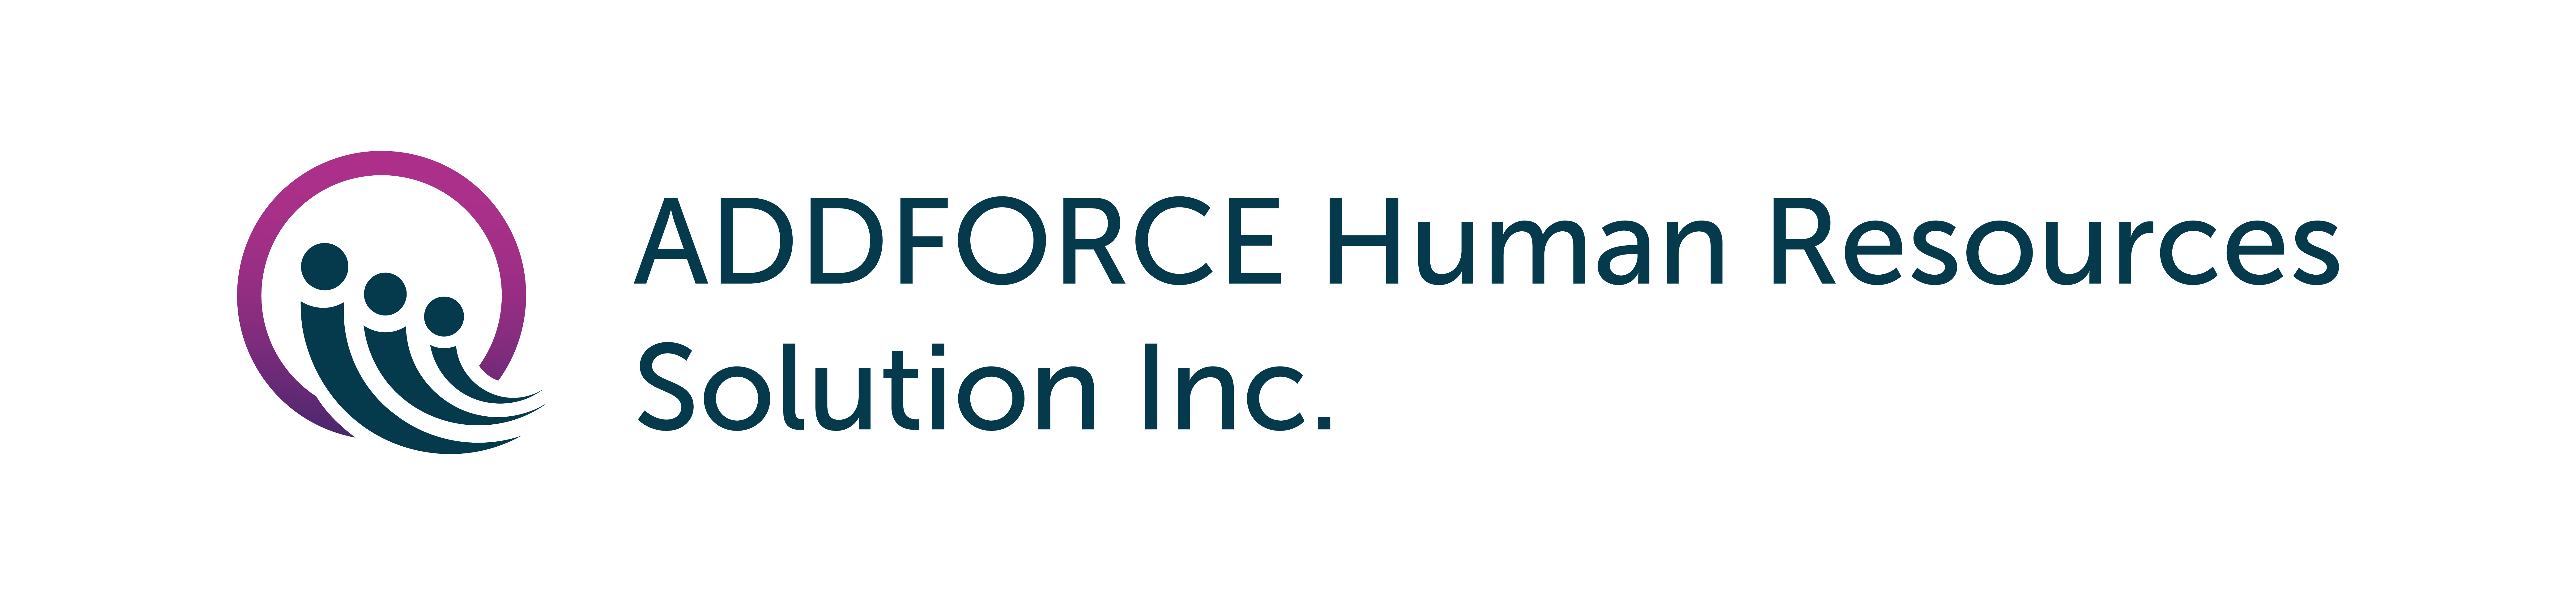 Addforce Human Resources Solution Inc.